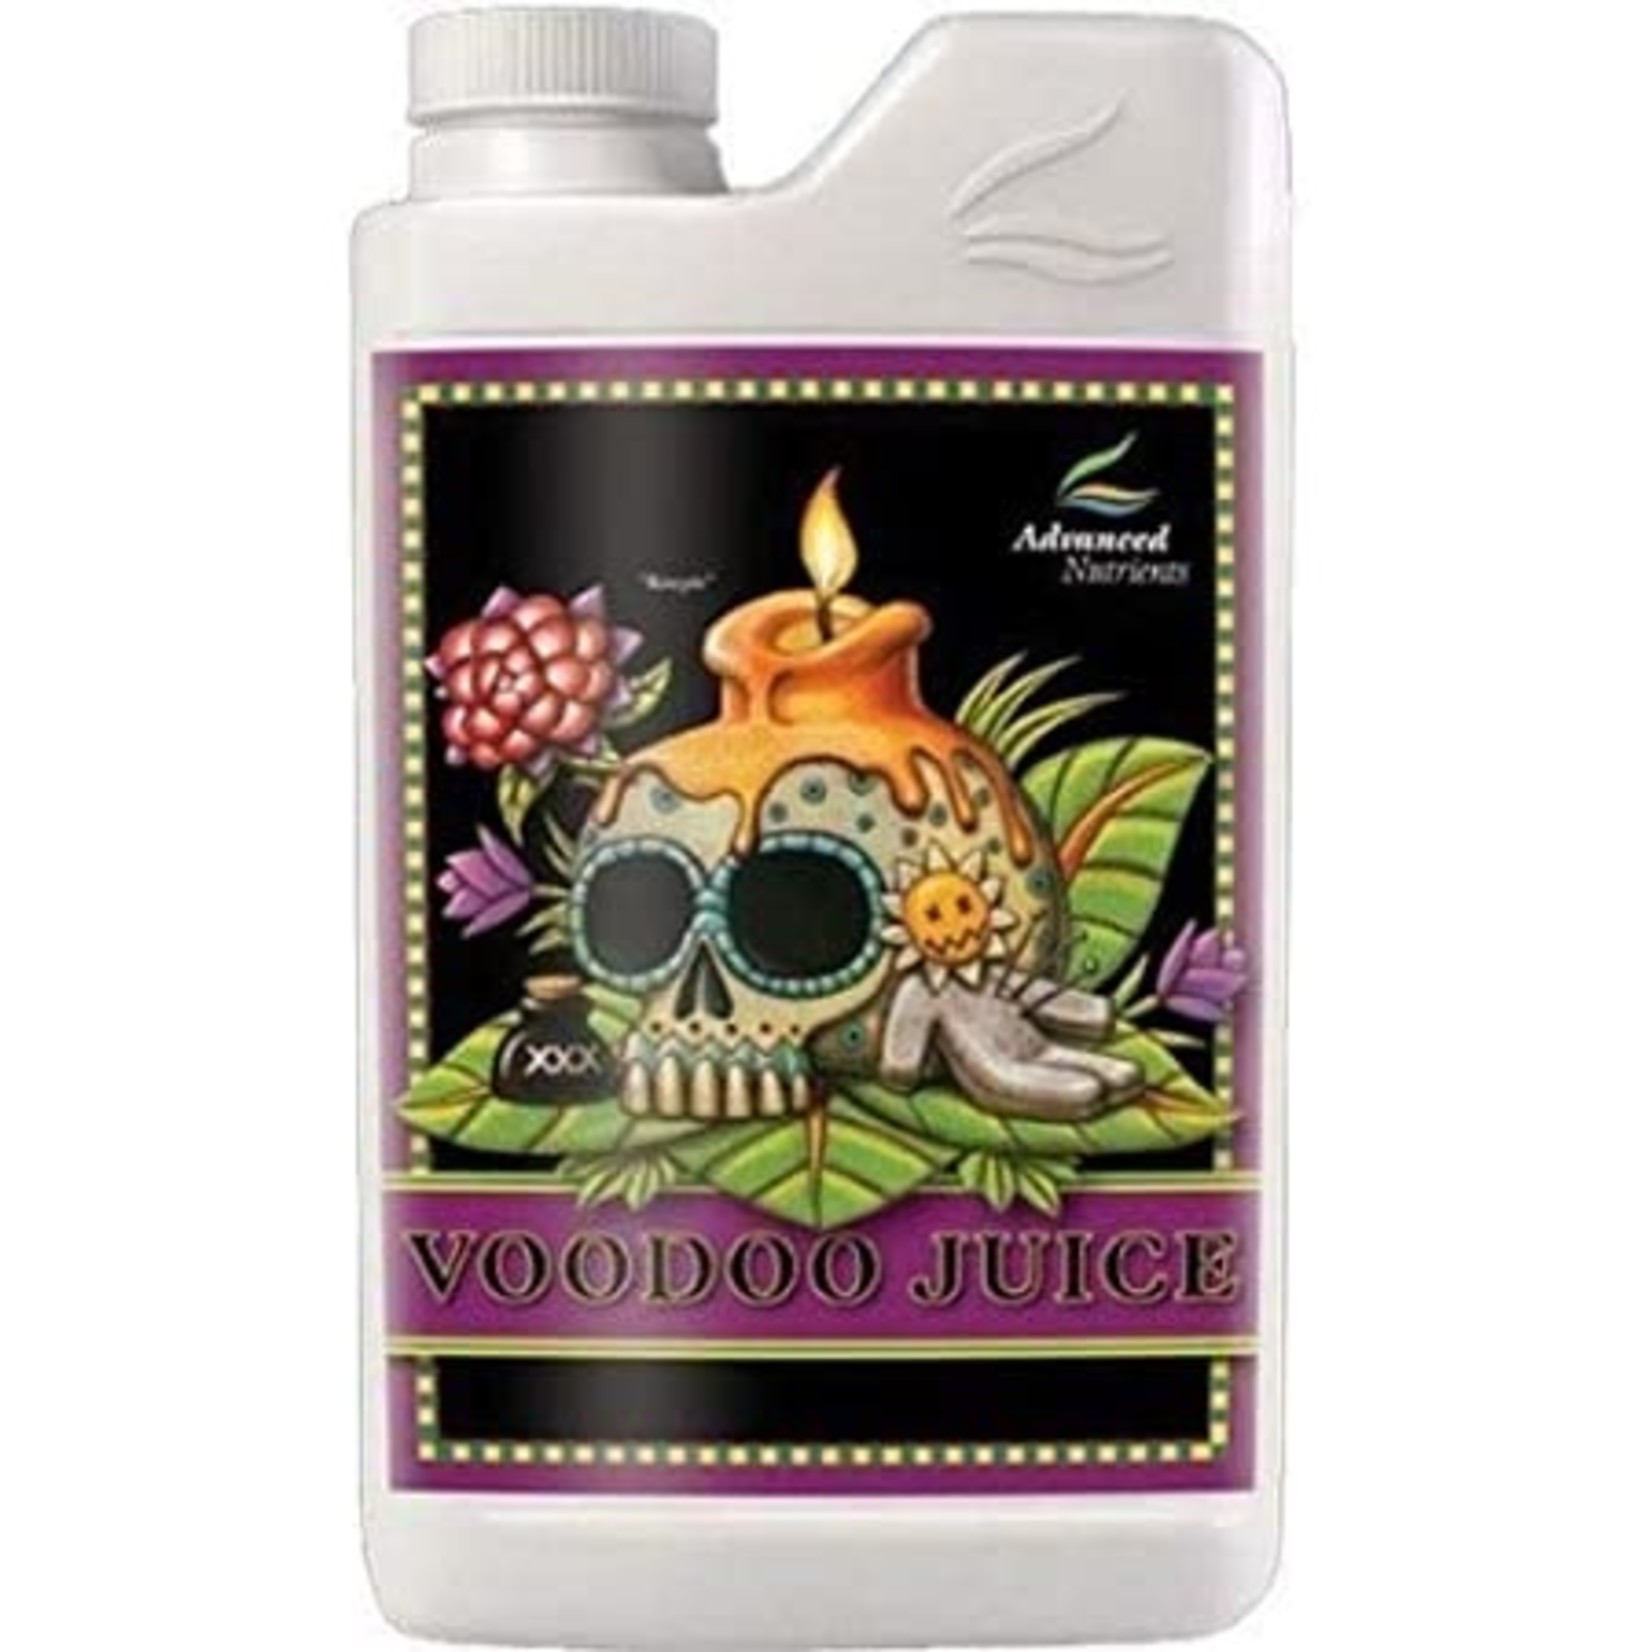 Advanced Nutrients Voodoo Juice (NEW) 4L